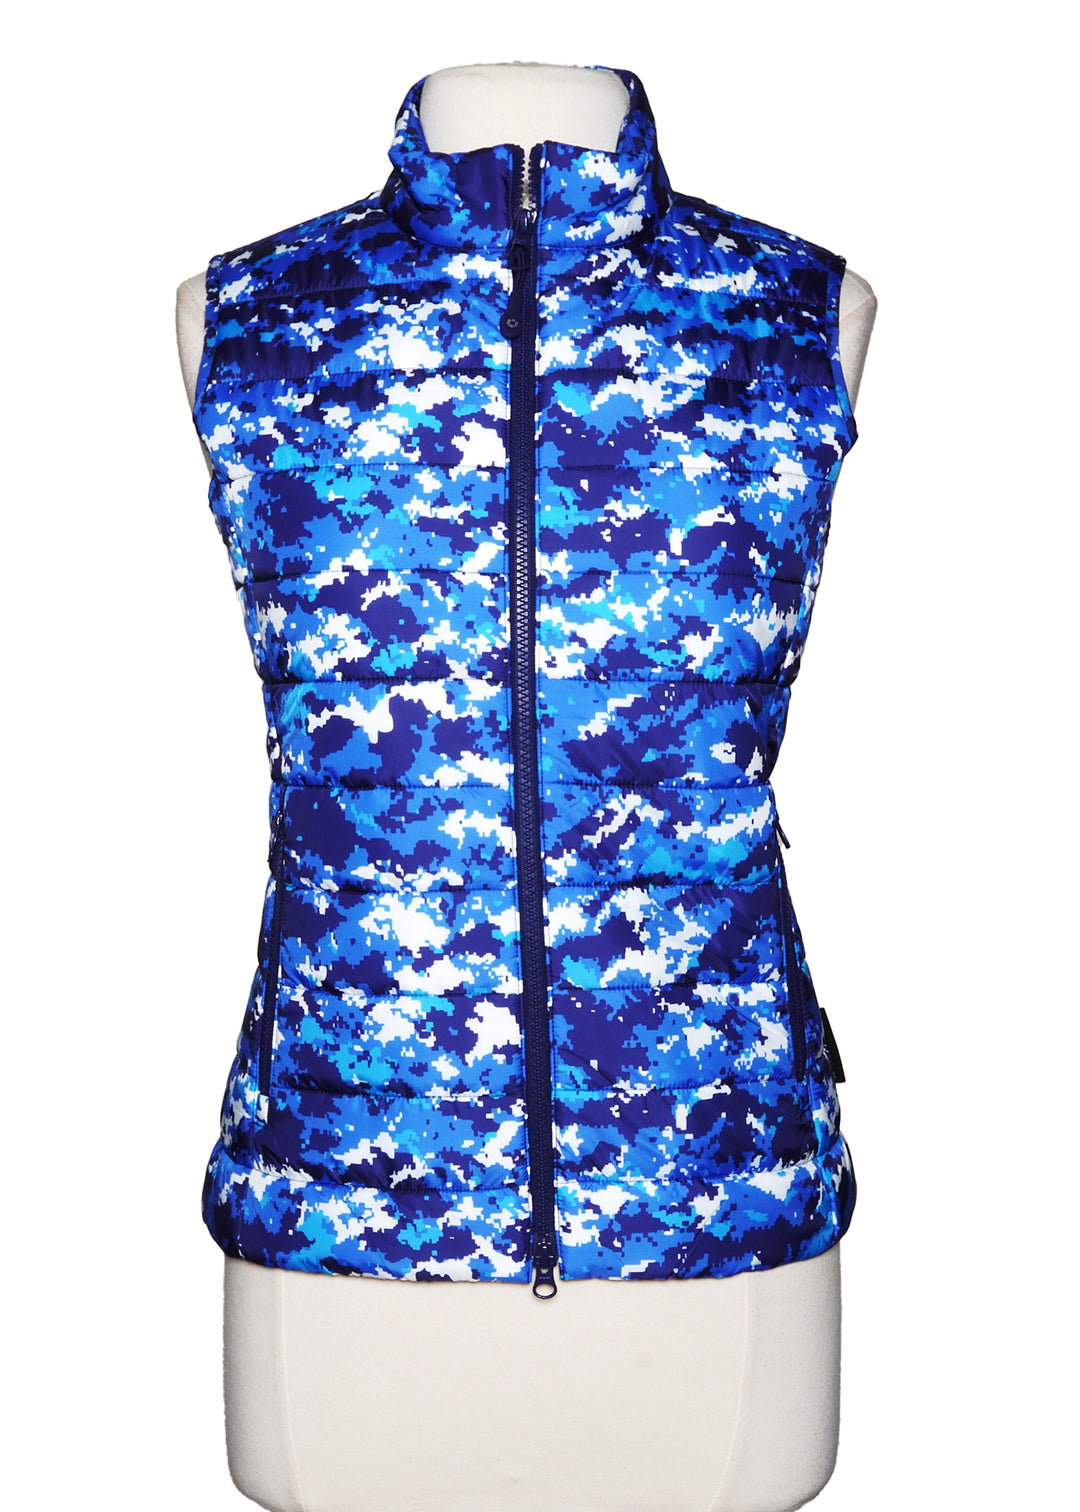 IBKUL Blue Camo Vest - Size Small - Skorzie